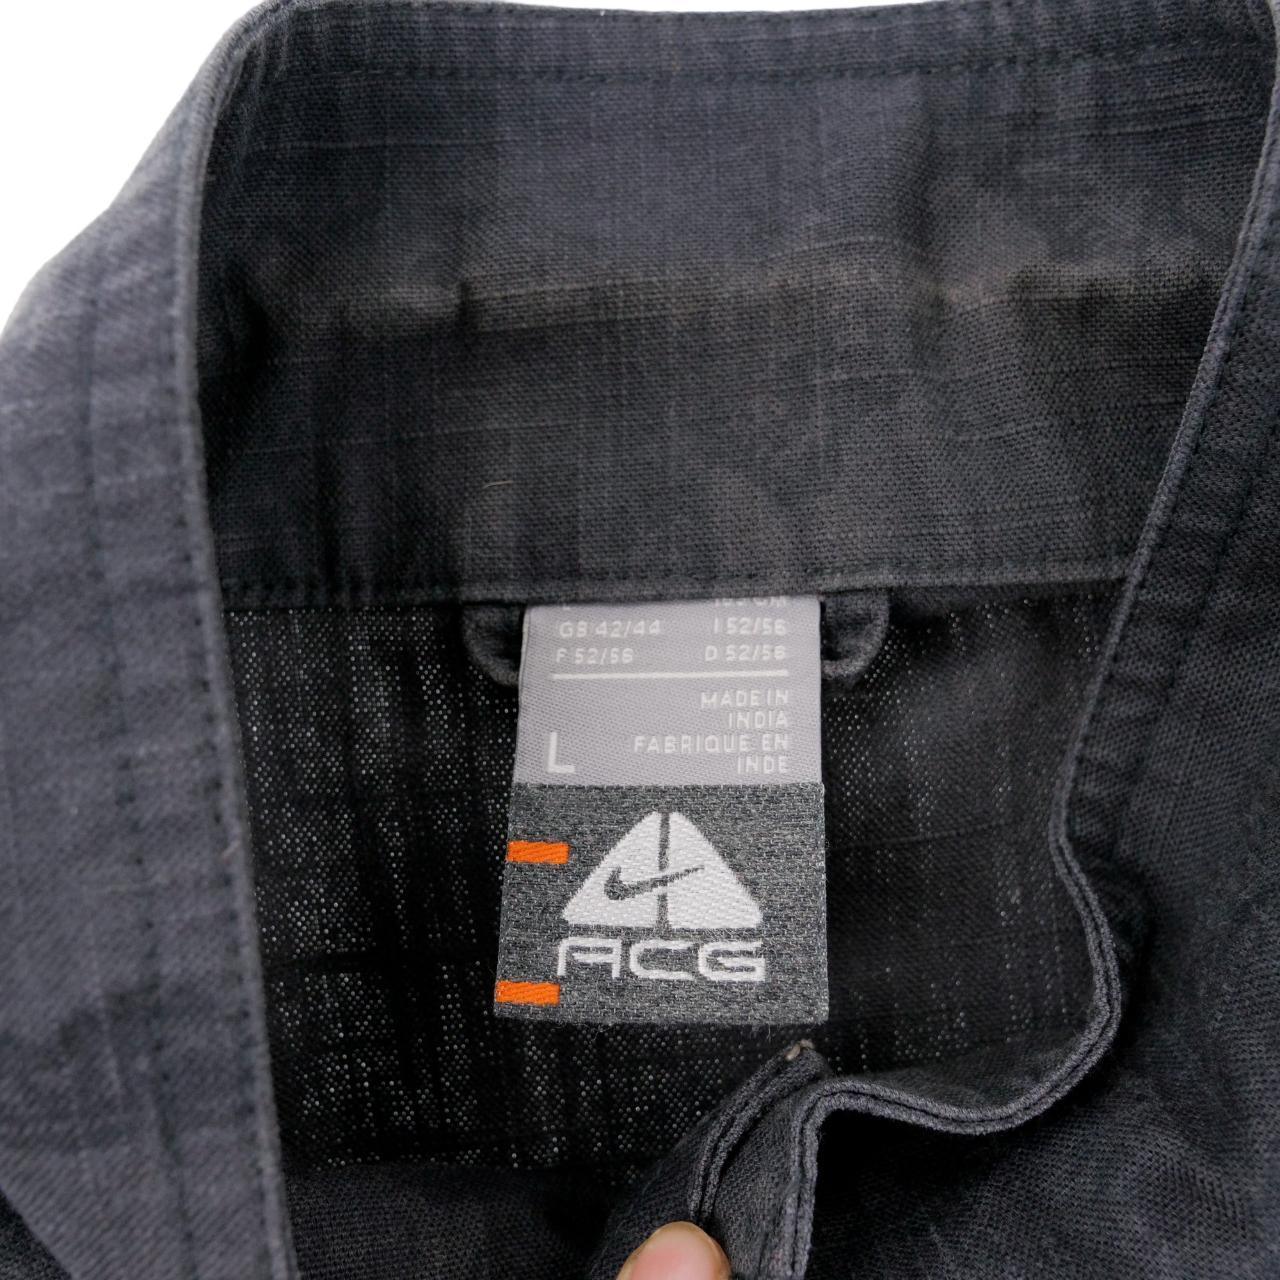 Vintage Nike ACG Pattern Jacket Size L - Known Source